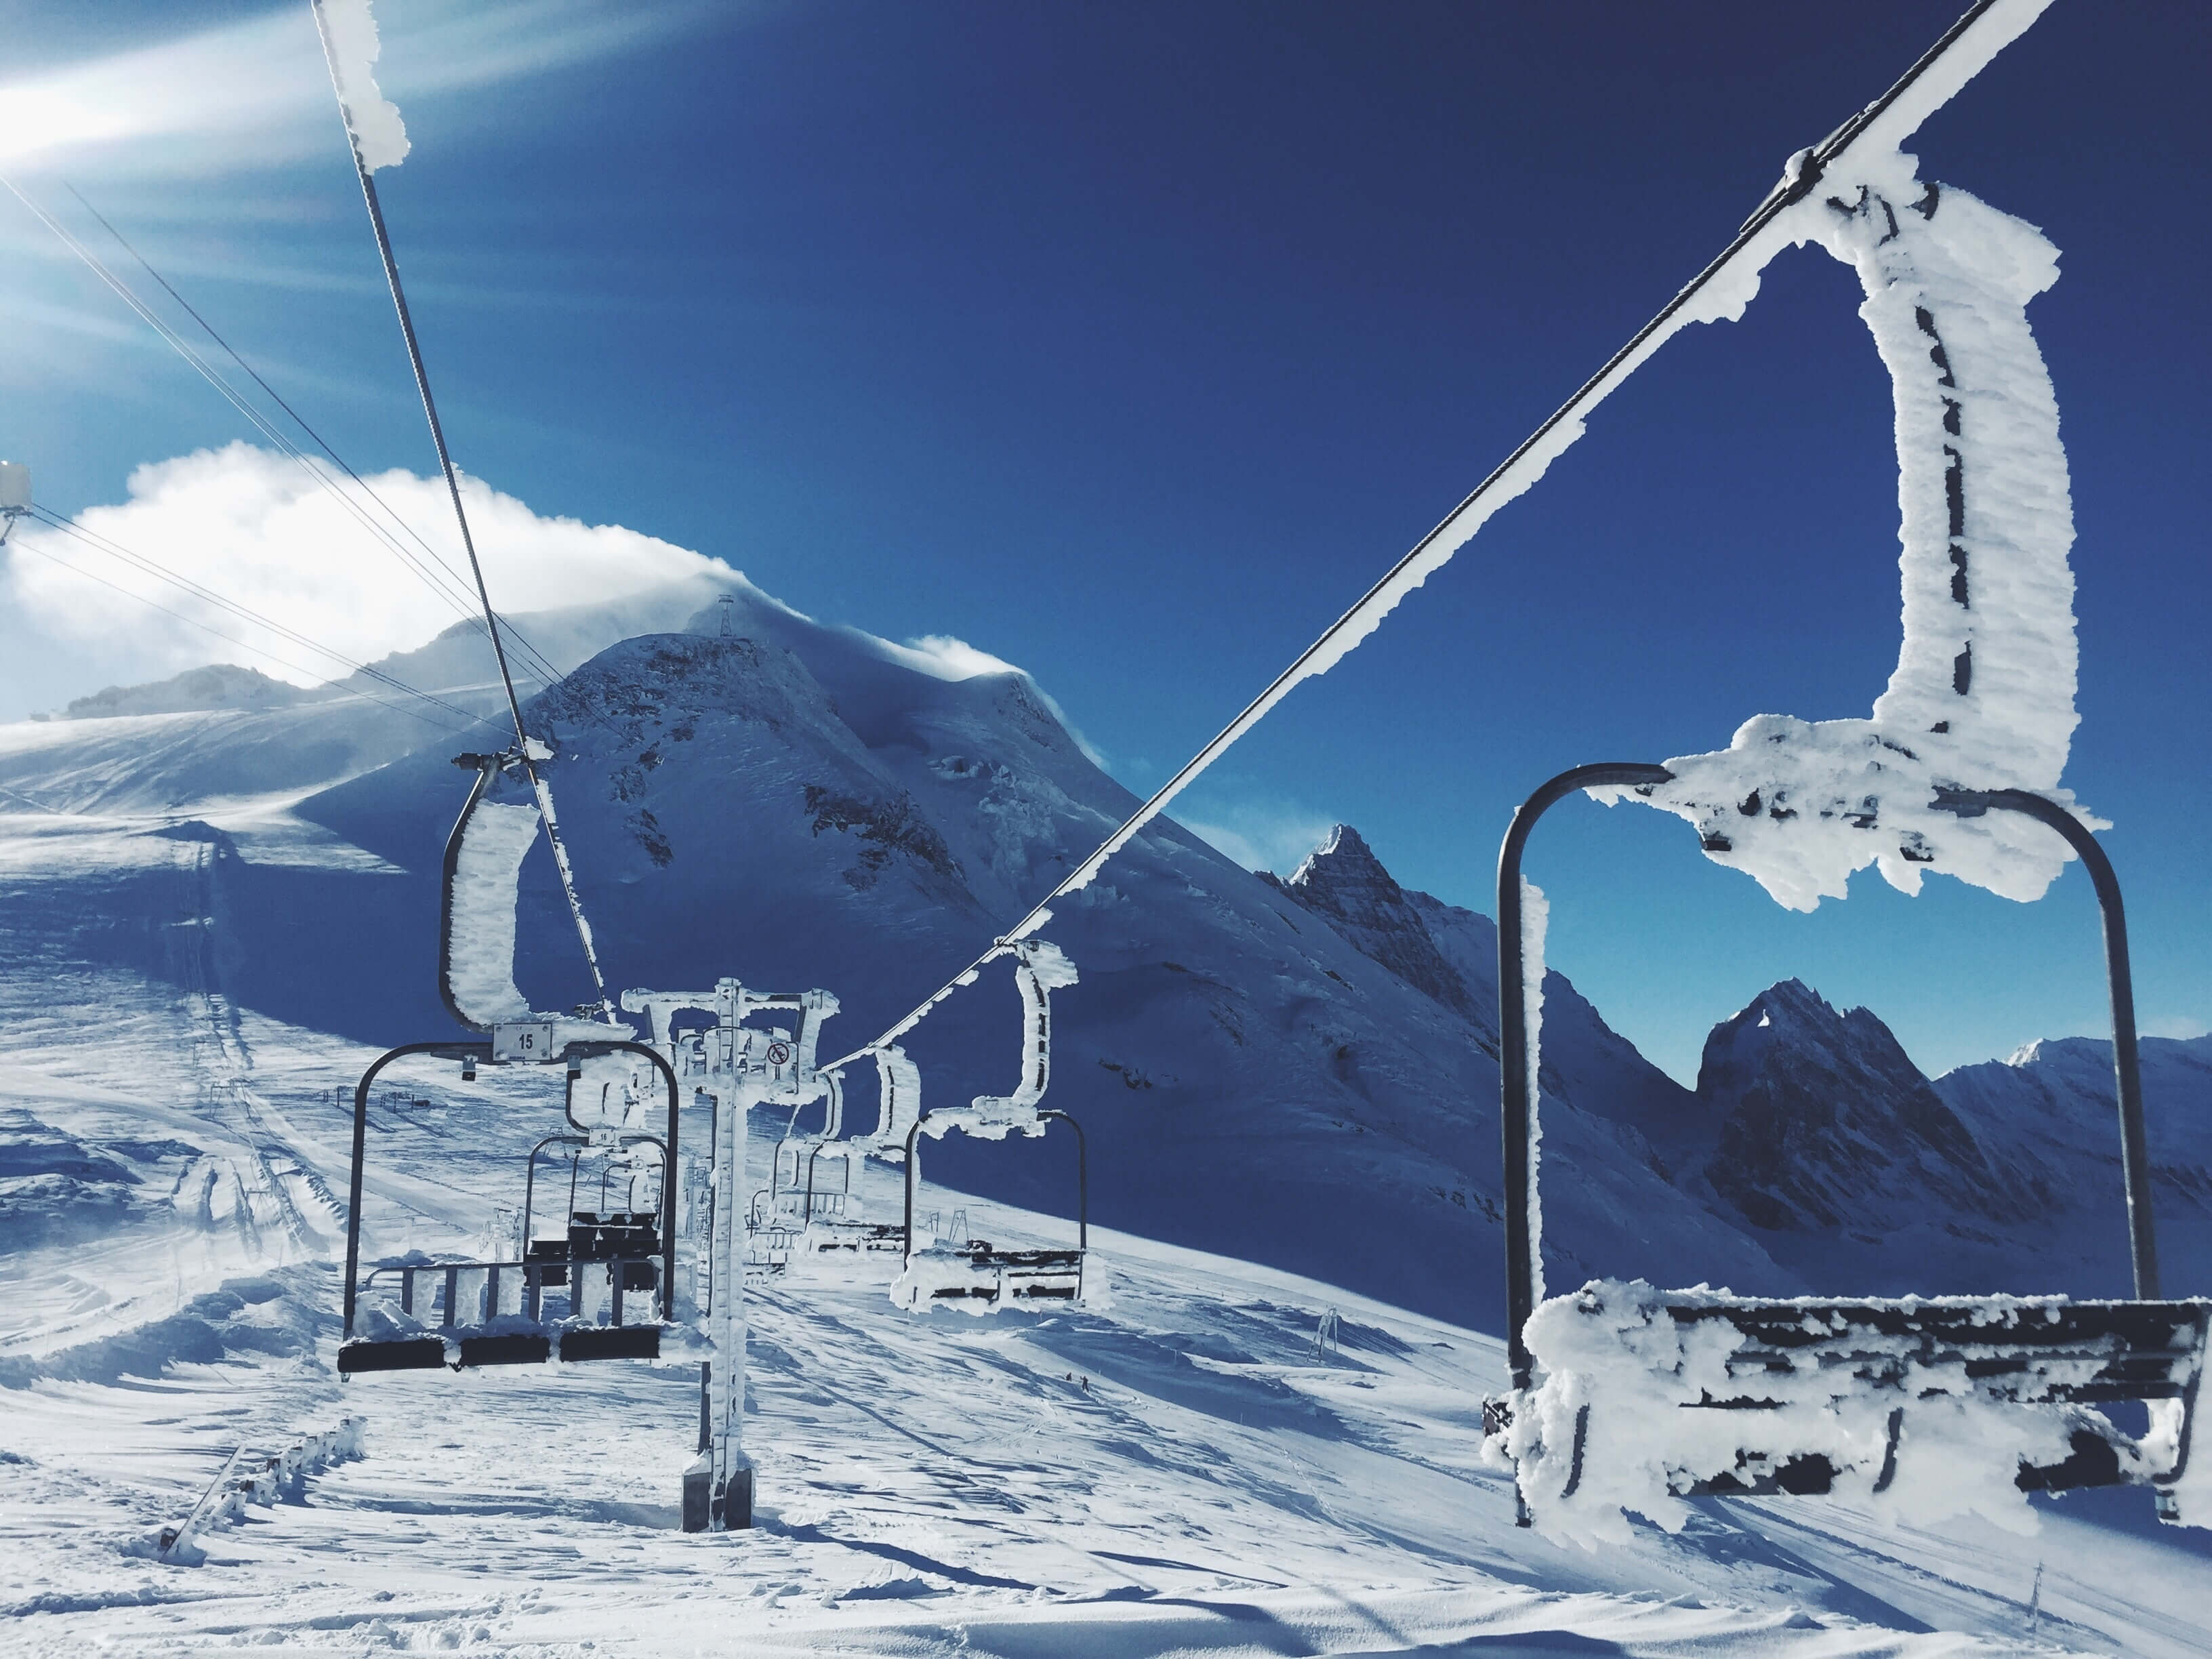 wallpapersden.com ski lift mountains snow 3264x2448